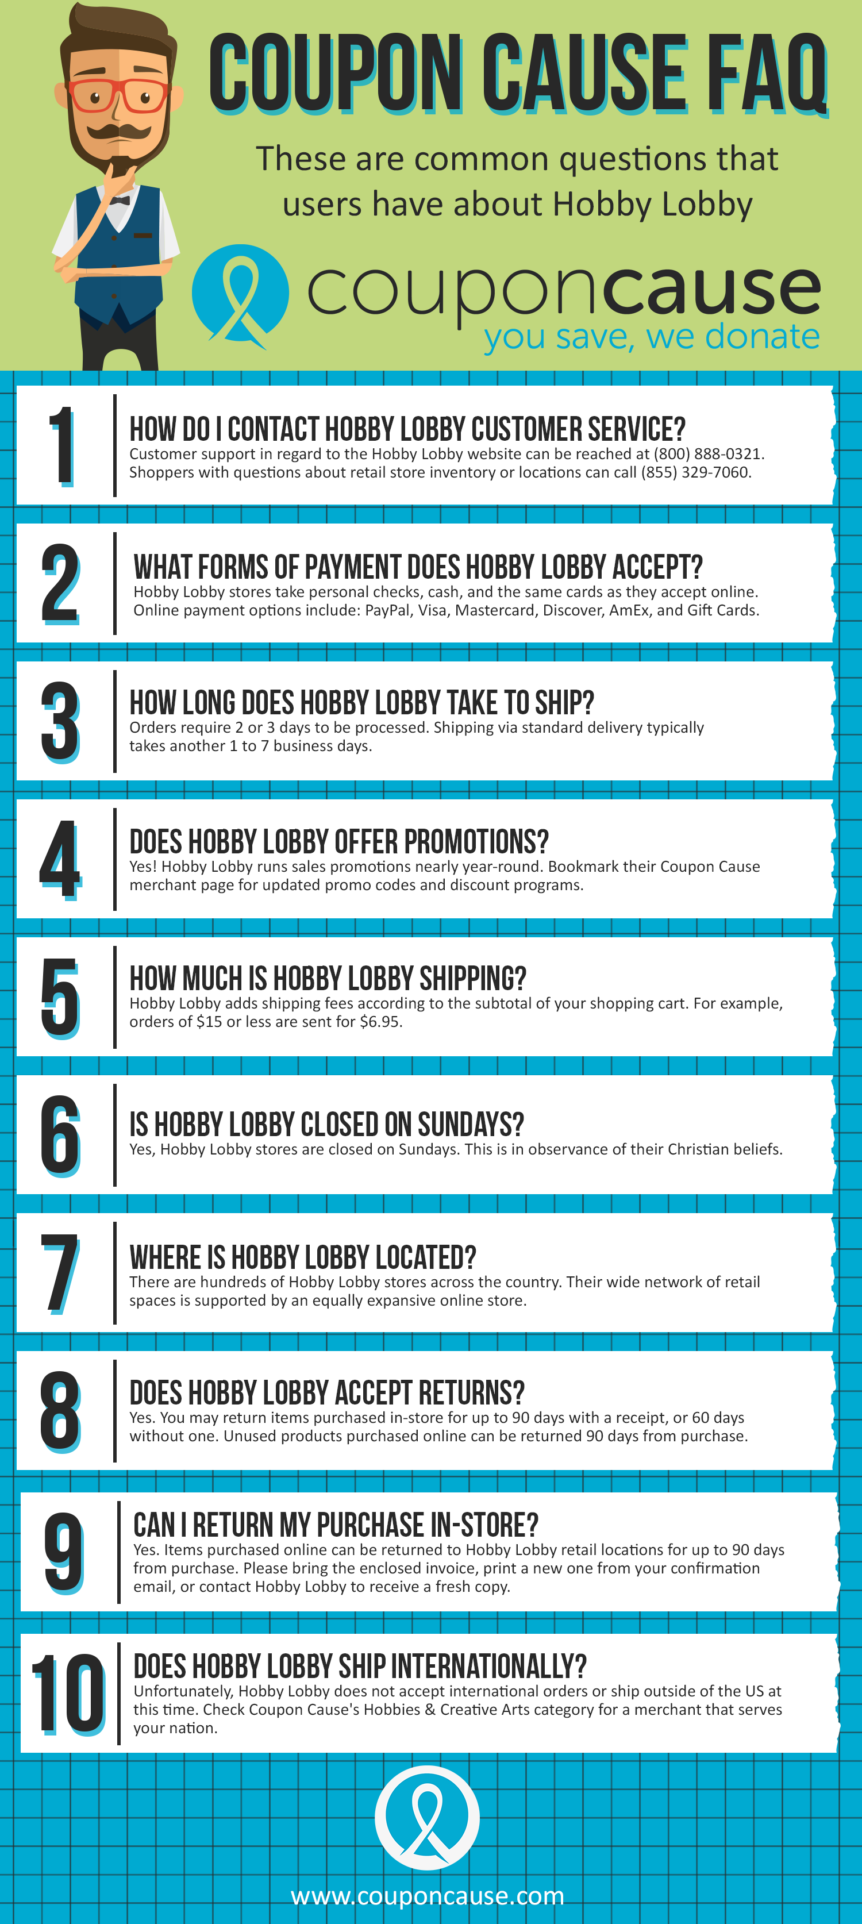 Hobby Lobby Coupon Cause FAQ (C.C. FAQ)